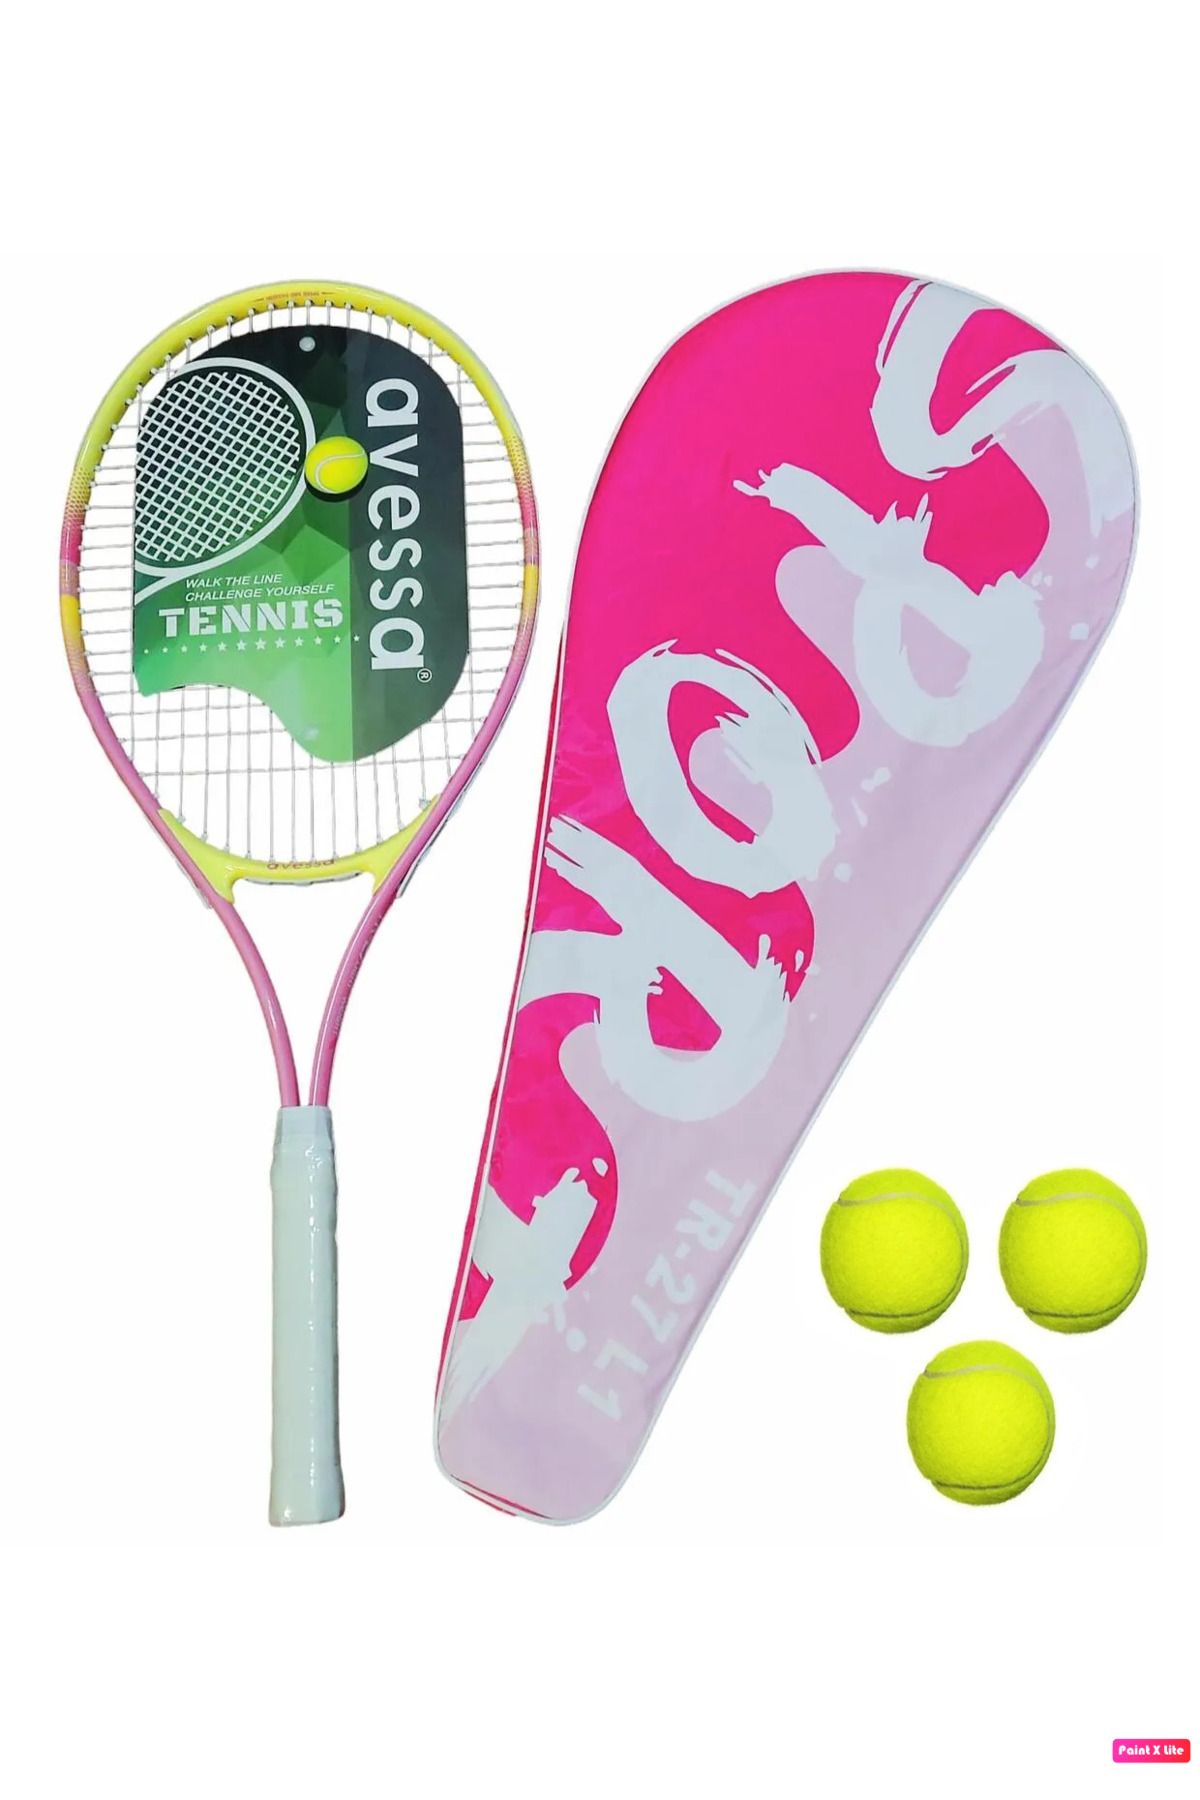 Avessa TR-27 Tenis Raket Set Her Yaş İçin Uygun Pembe 260 gr + 3 Tenis Topu